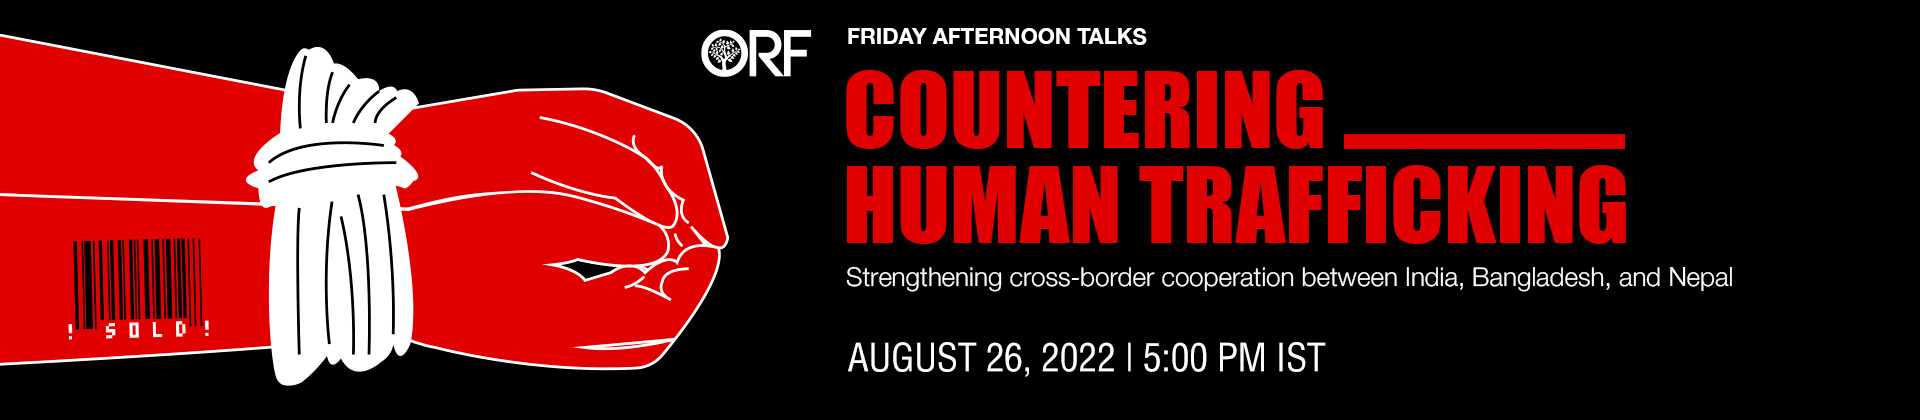 Friday Afternoon Talks | Countering Human Trafficking: Strengthening cross-border cooperation between India, Bangladesh, and Nepal